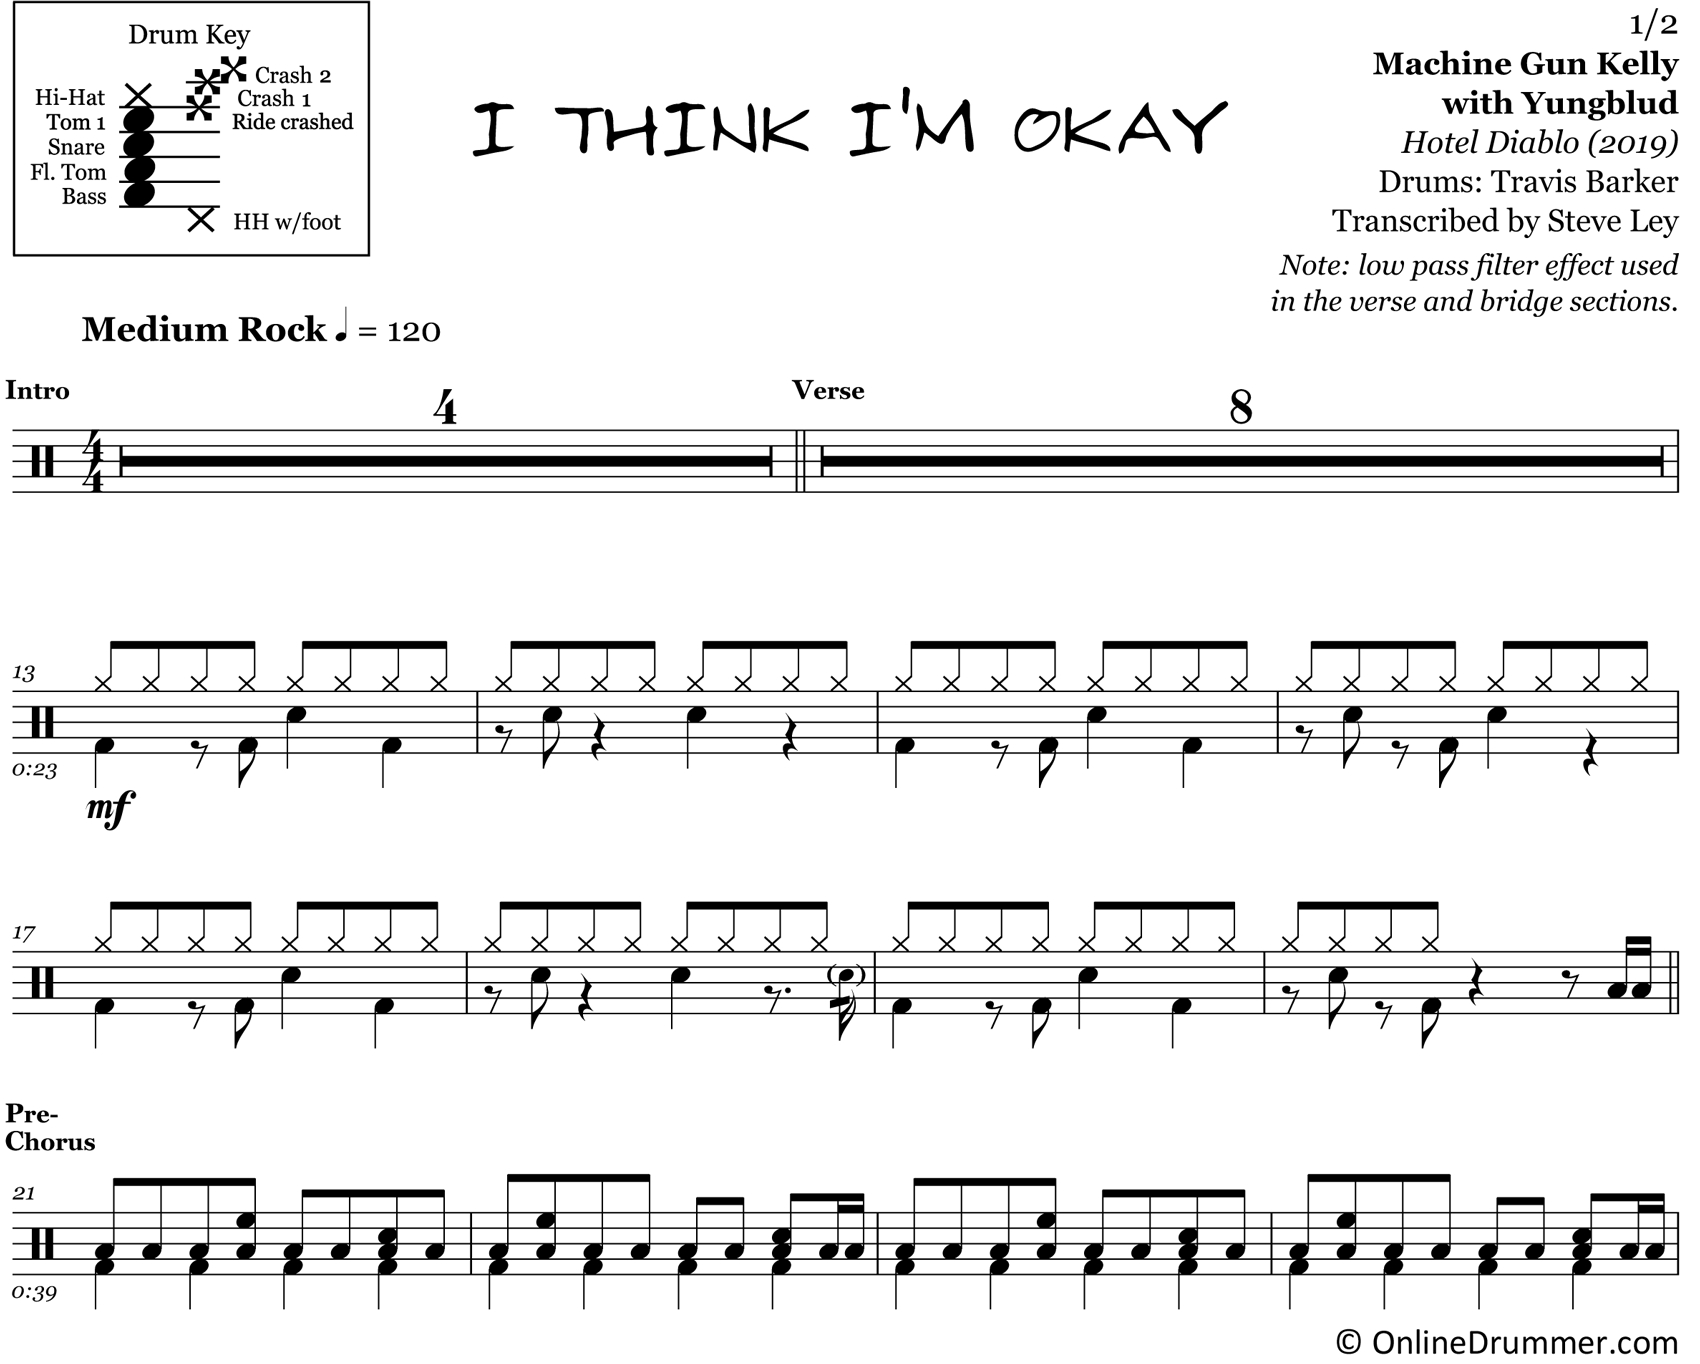 I Think I'm Okay - Machine Gun Kelly with Yungblud - Drum Sheet Music